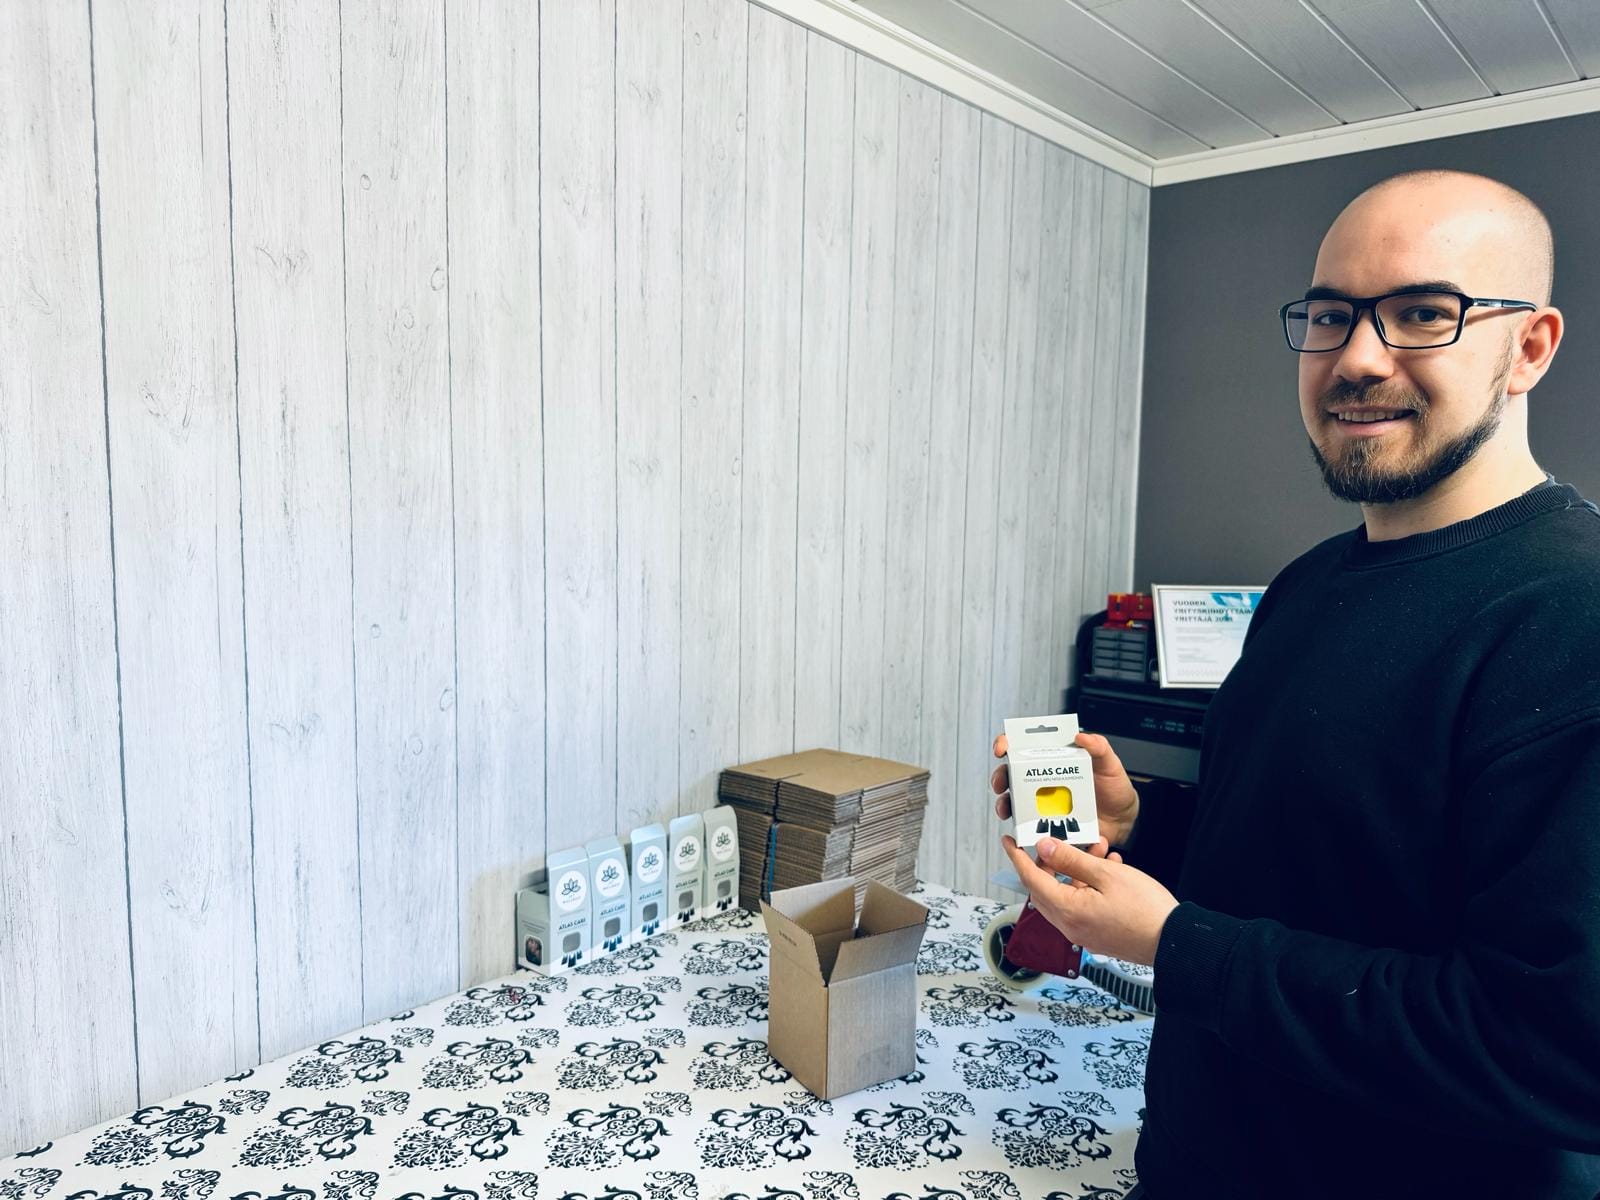 Joonas Rakkolainen shows off the product he has developed, Atlas Care.